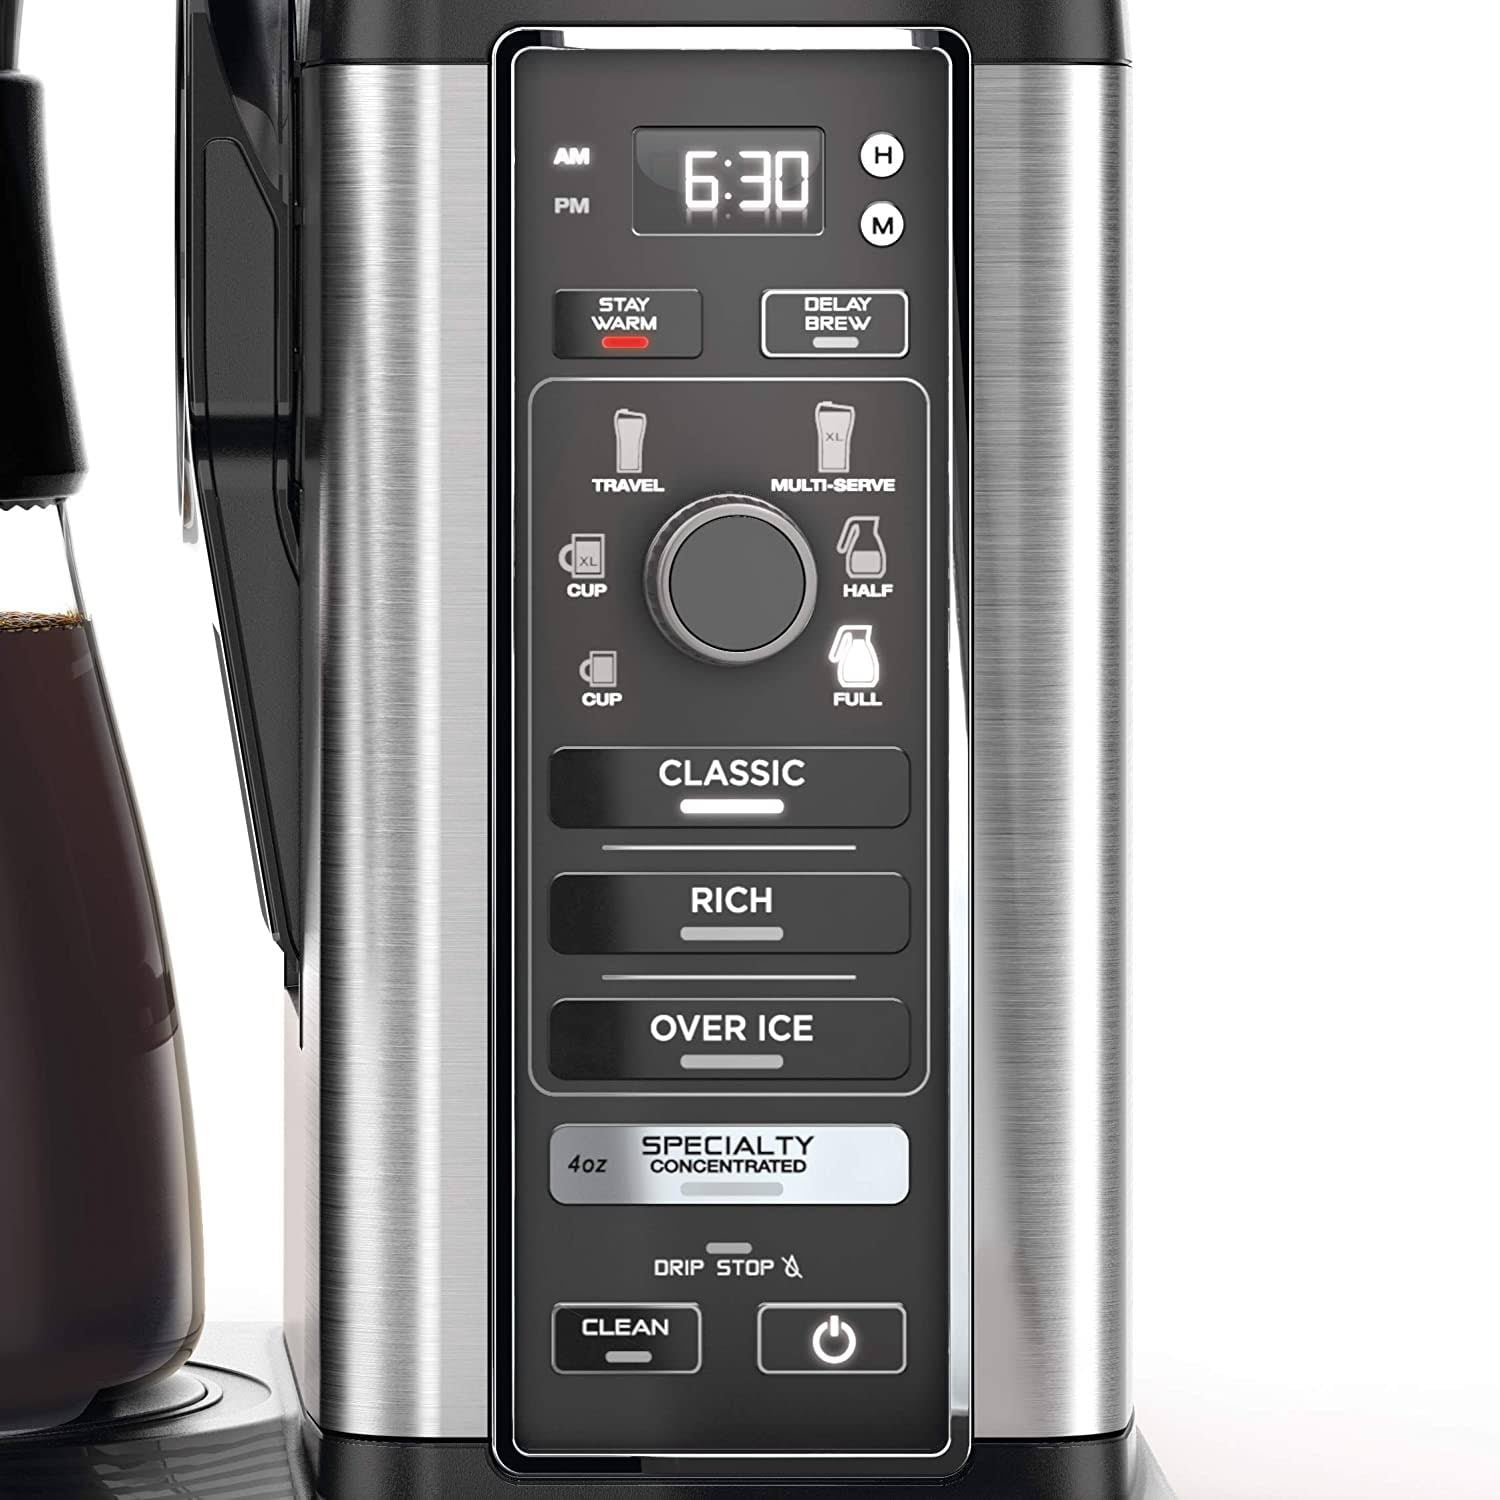 Ninja Replacement Main Unit CM300 Hot & Iced Coffee Maker